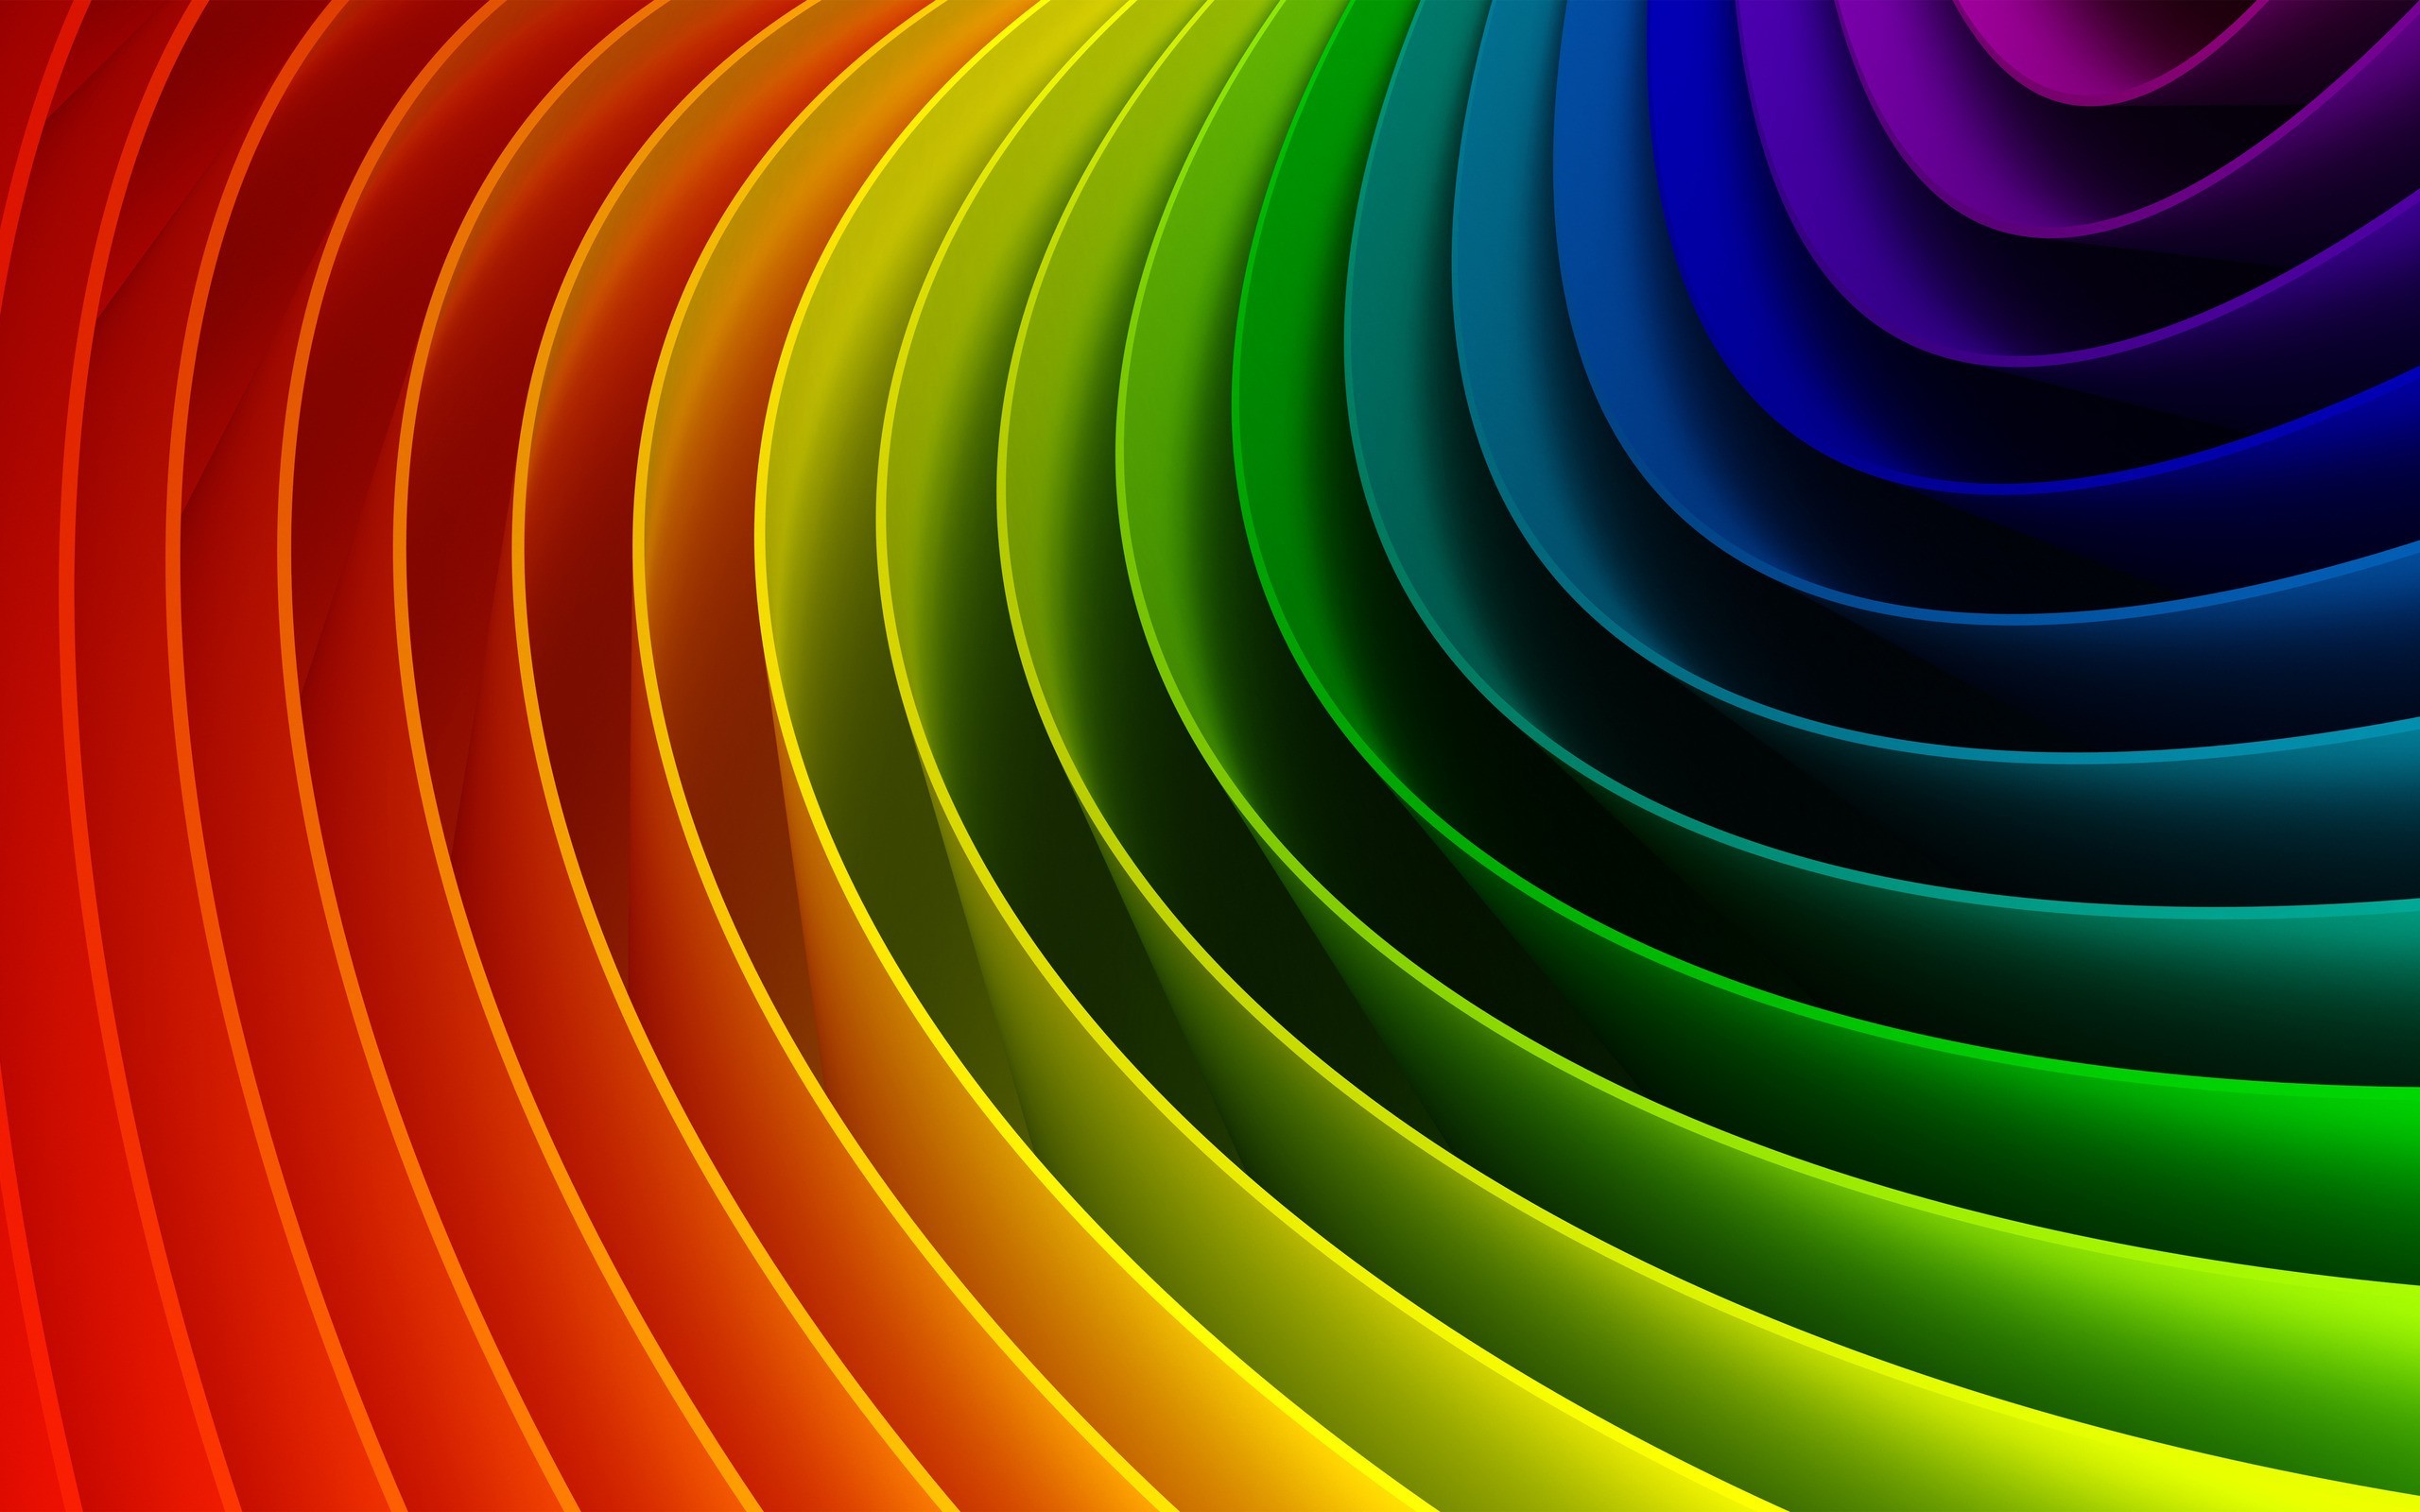 Download wallpaper rainbow background Rainbow download